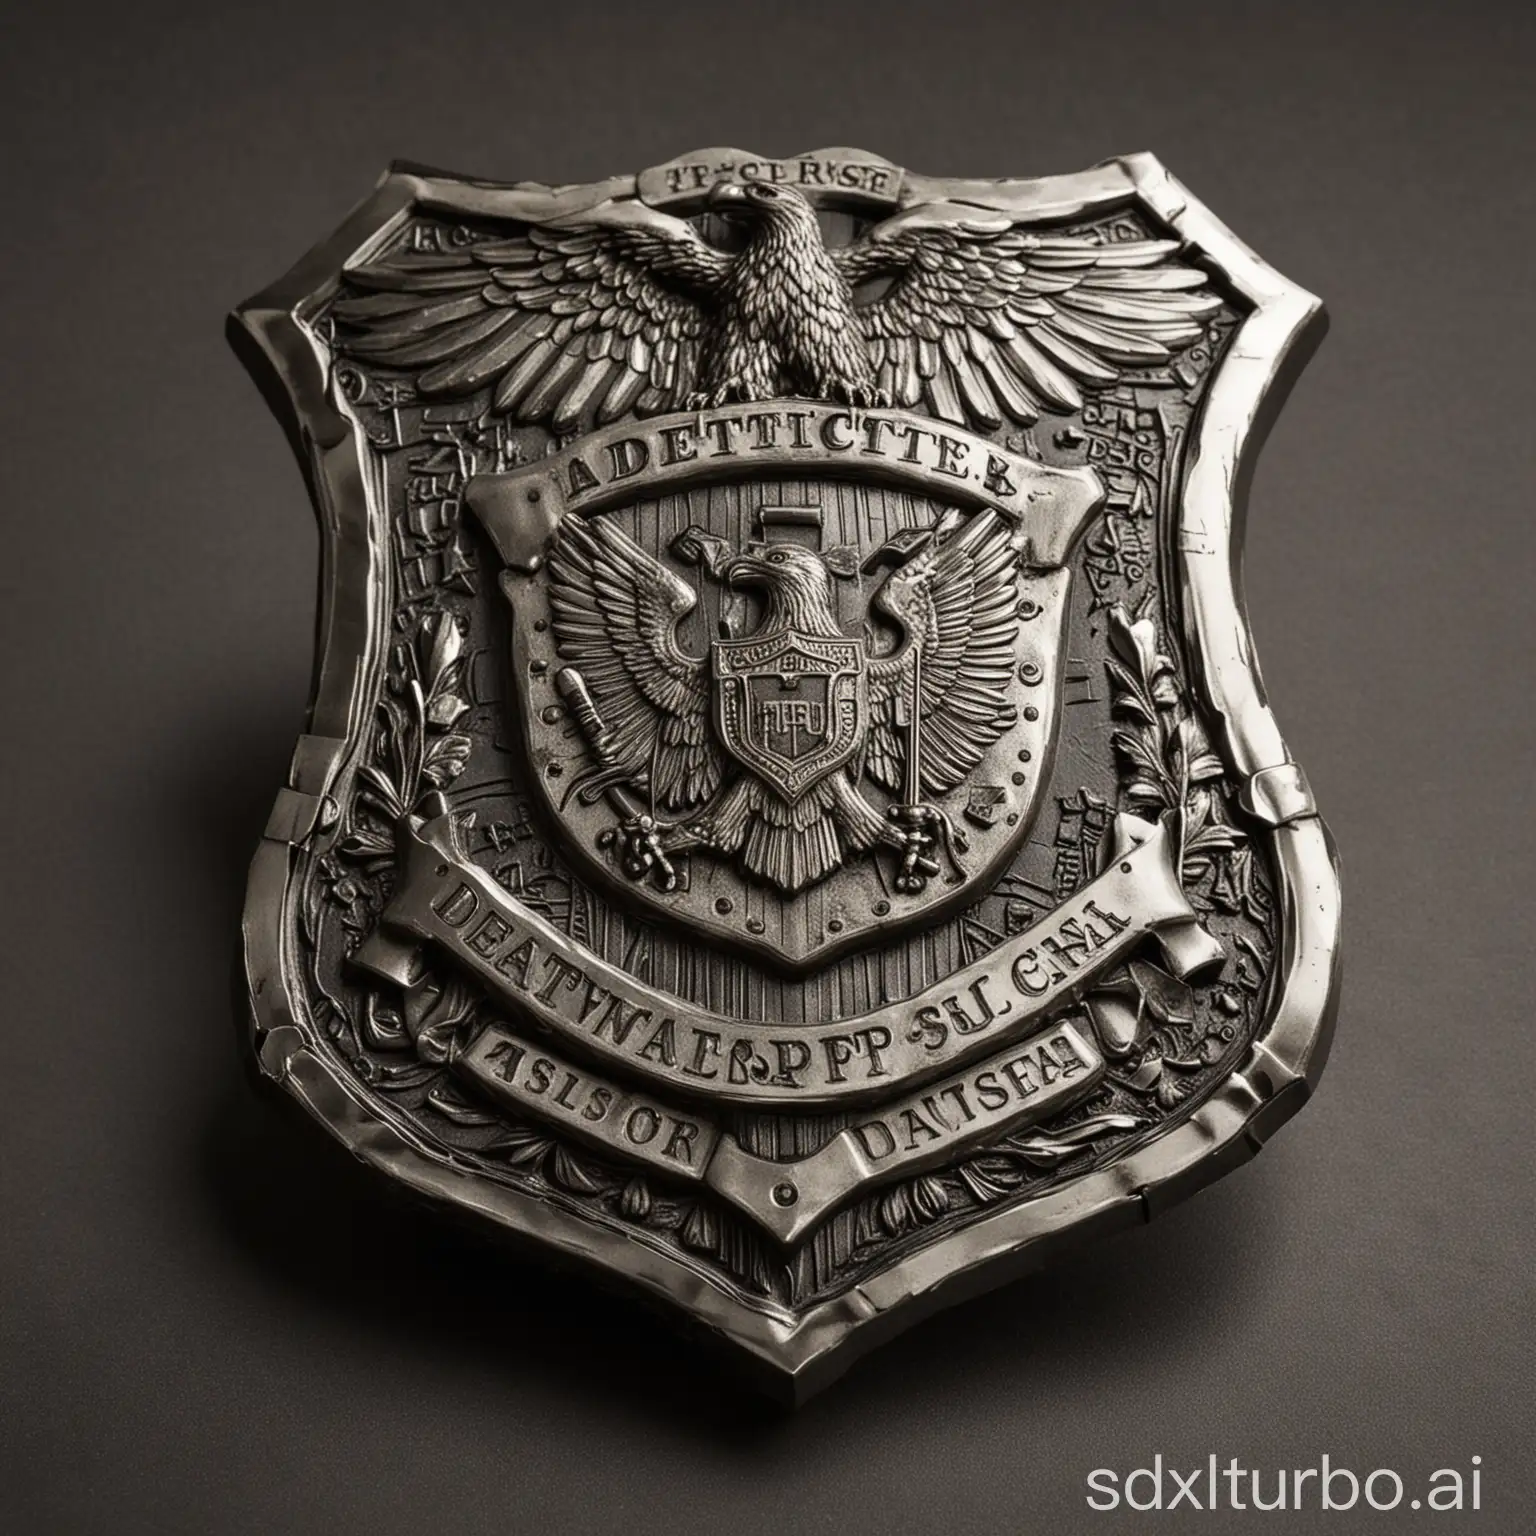 HighDefinition-Detectives-Badge-Intricately-Engraved-Metal-Emblem